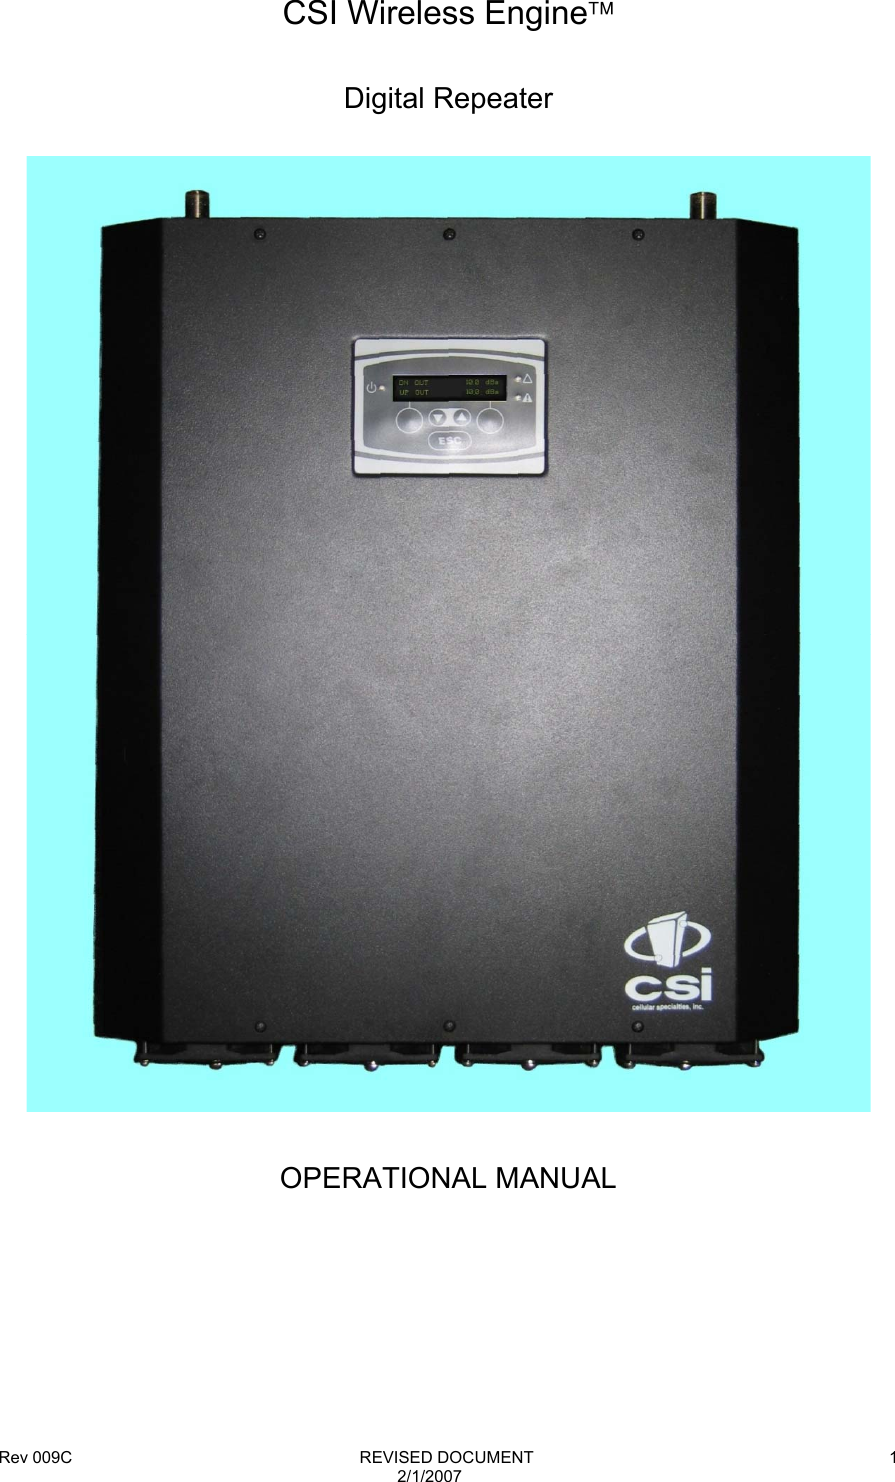 Rev 009C                                                              REVISED DOCUMENT 2/1/2007 1 CSI Wireless Engine  Digital Repeater    OPERATIONAL MANUAL 